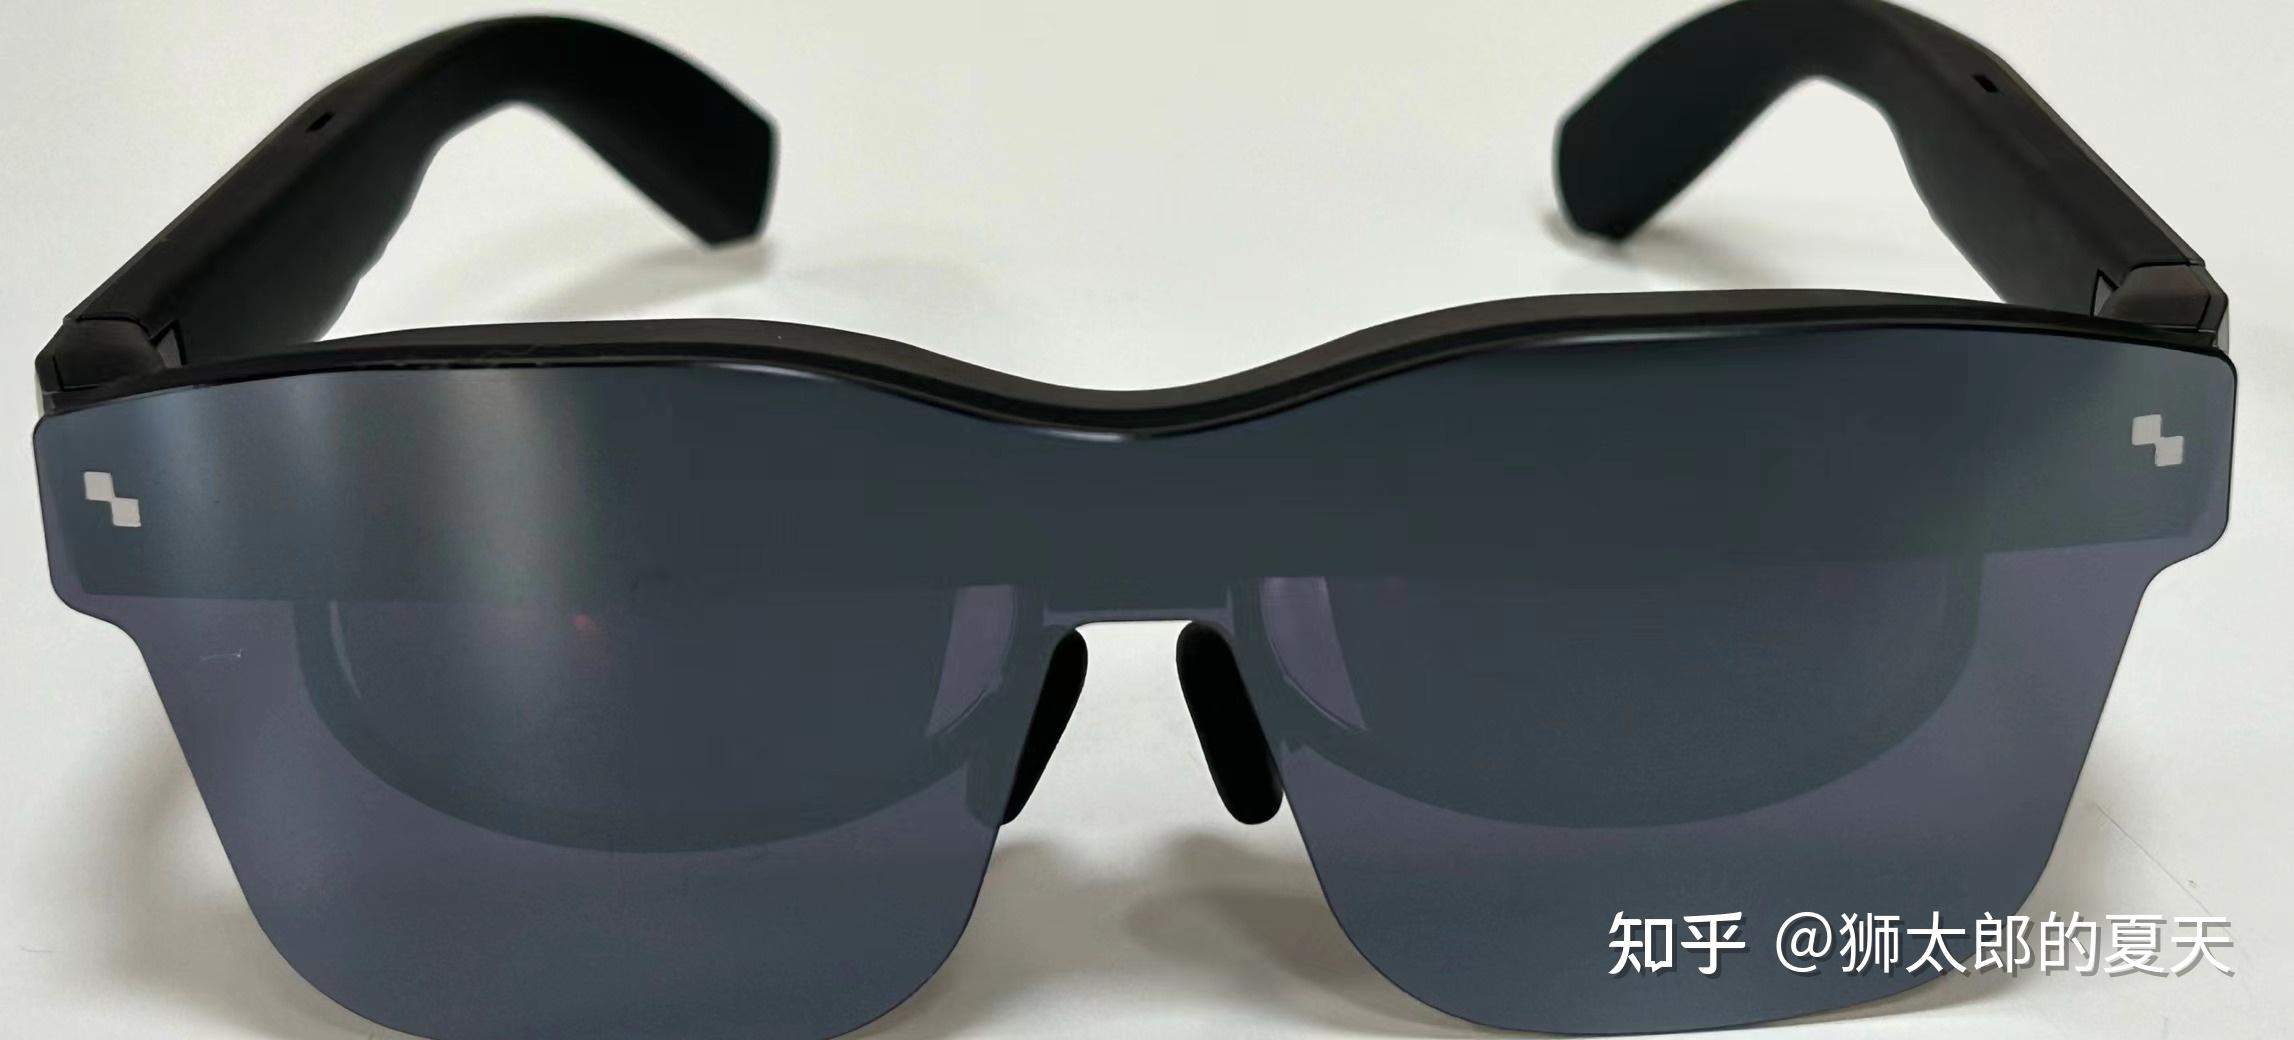 ar眼镜市场占有率名列前茅,这款全新的xreal air 2无论是画面效果还是